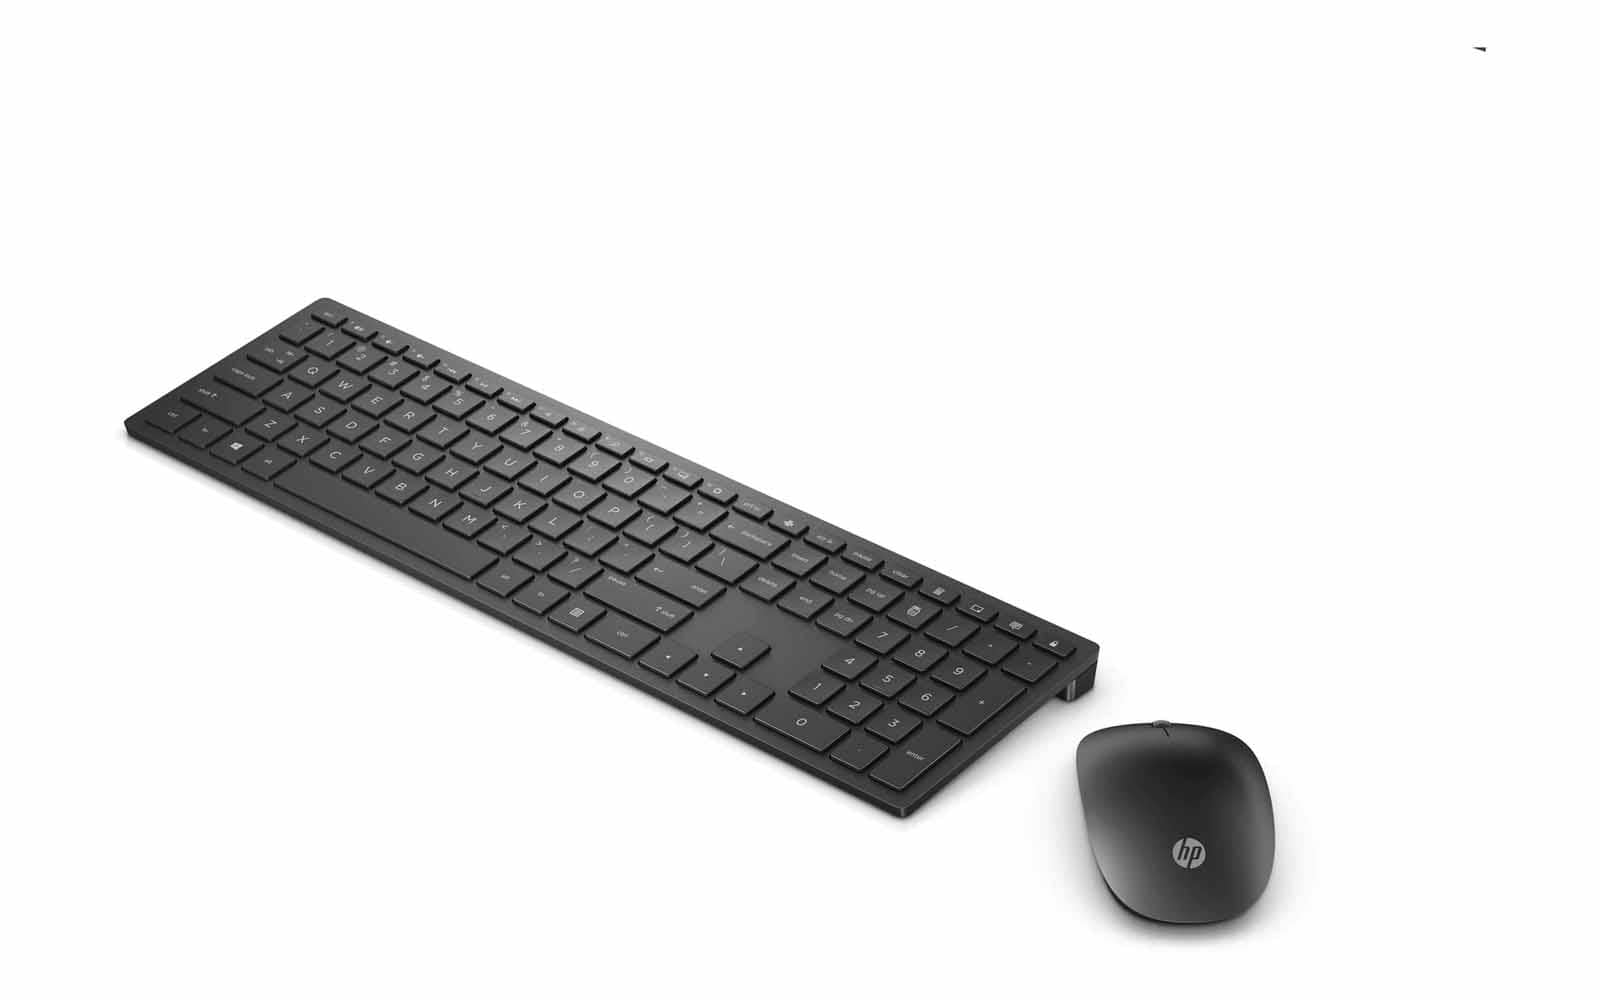 hp-pavilion-wireless-keyboard-mouse-800